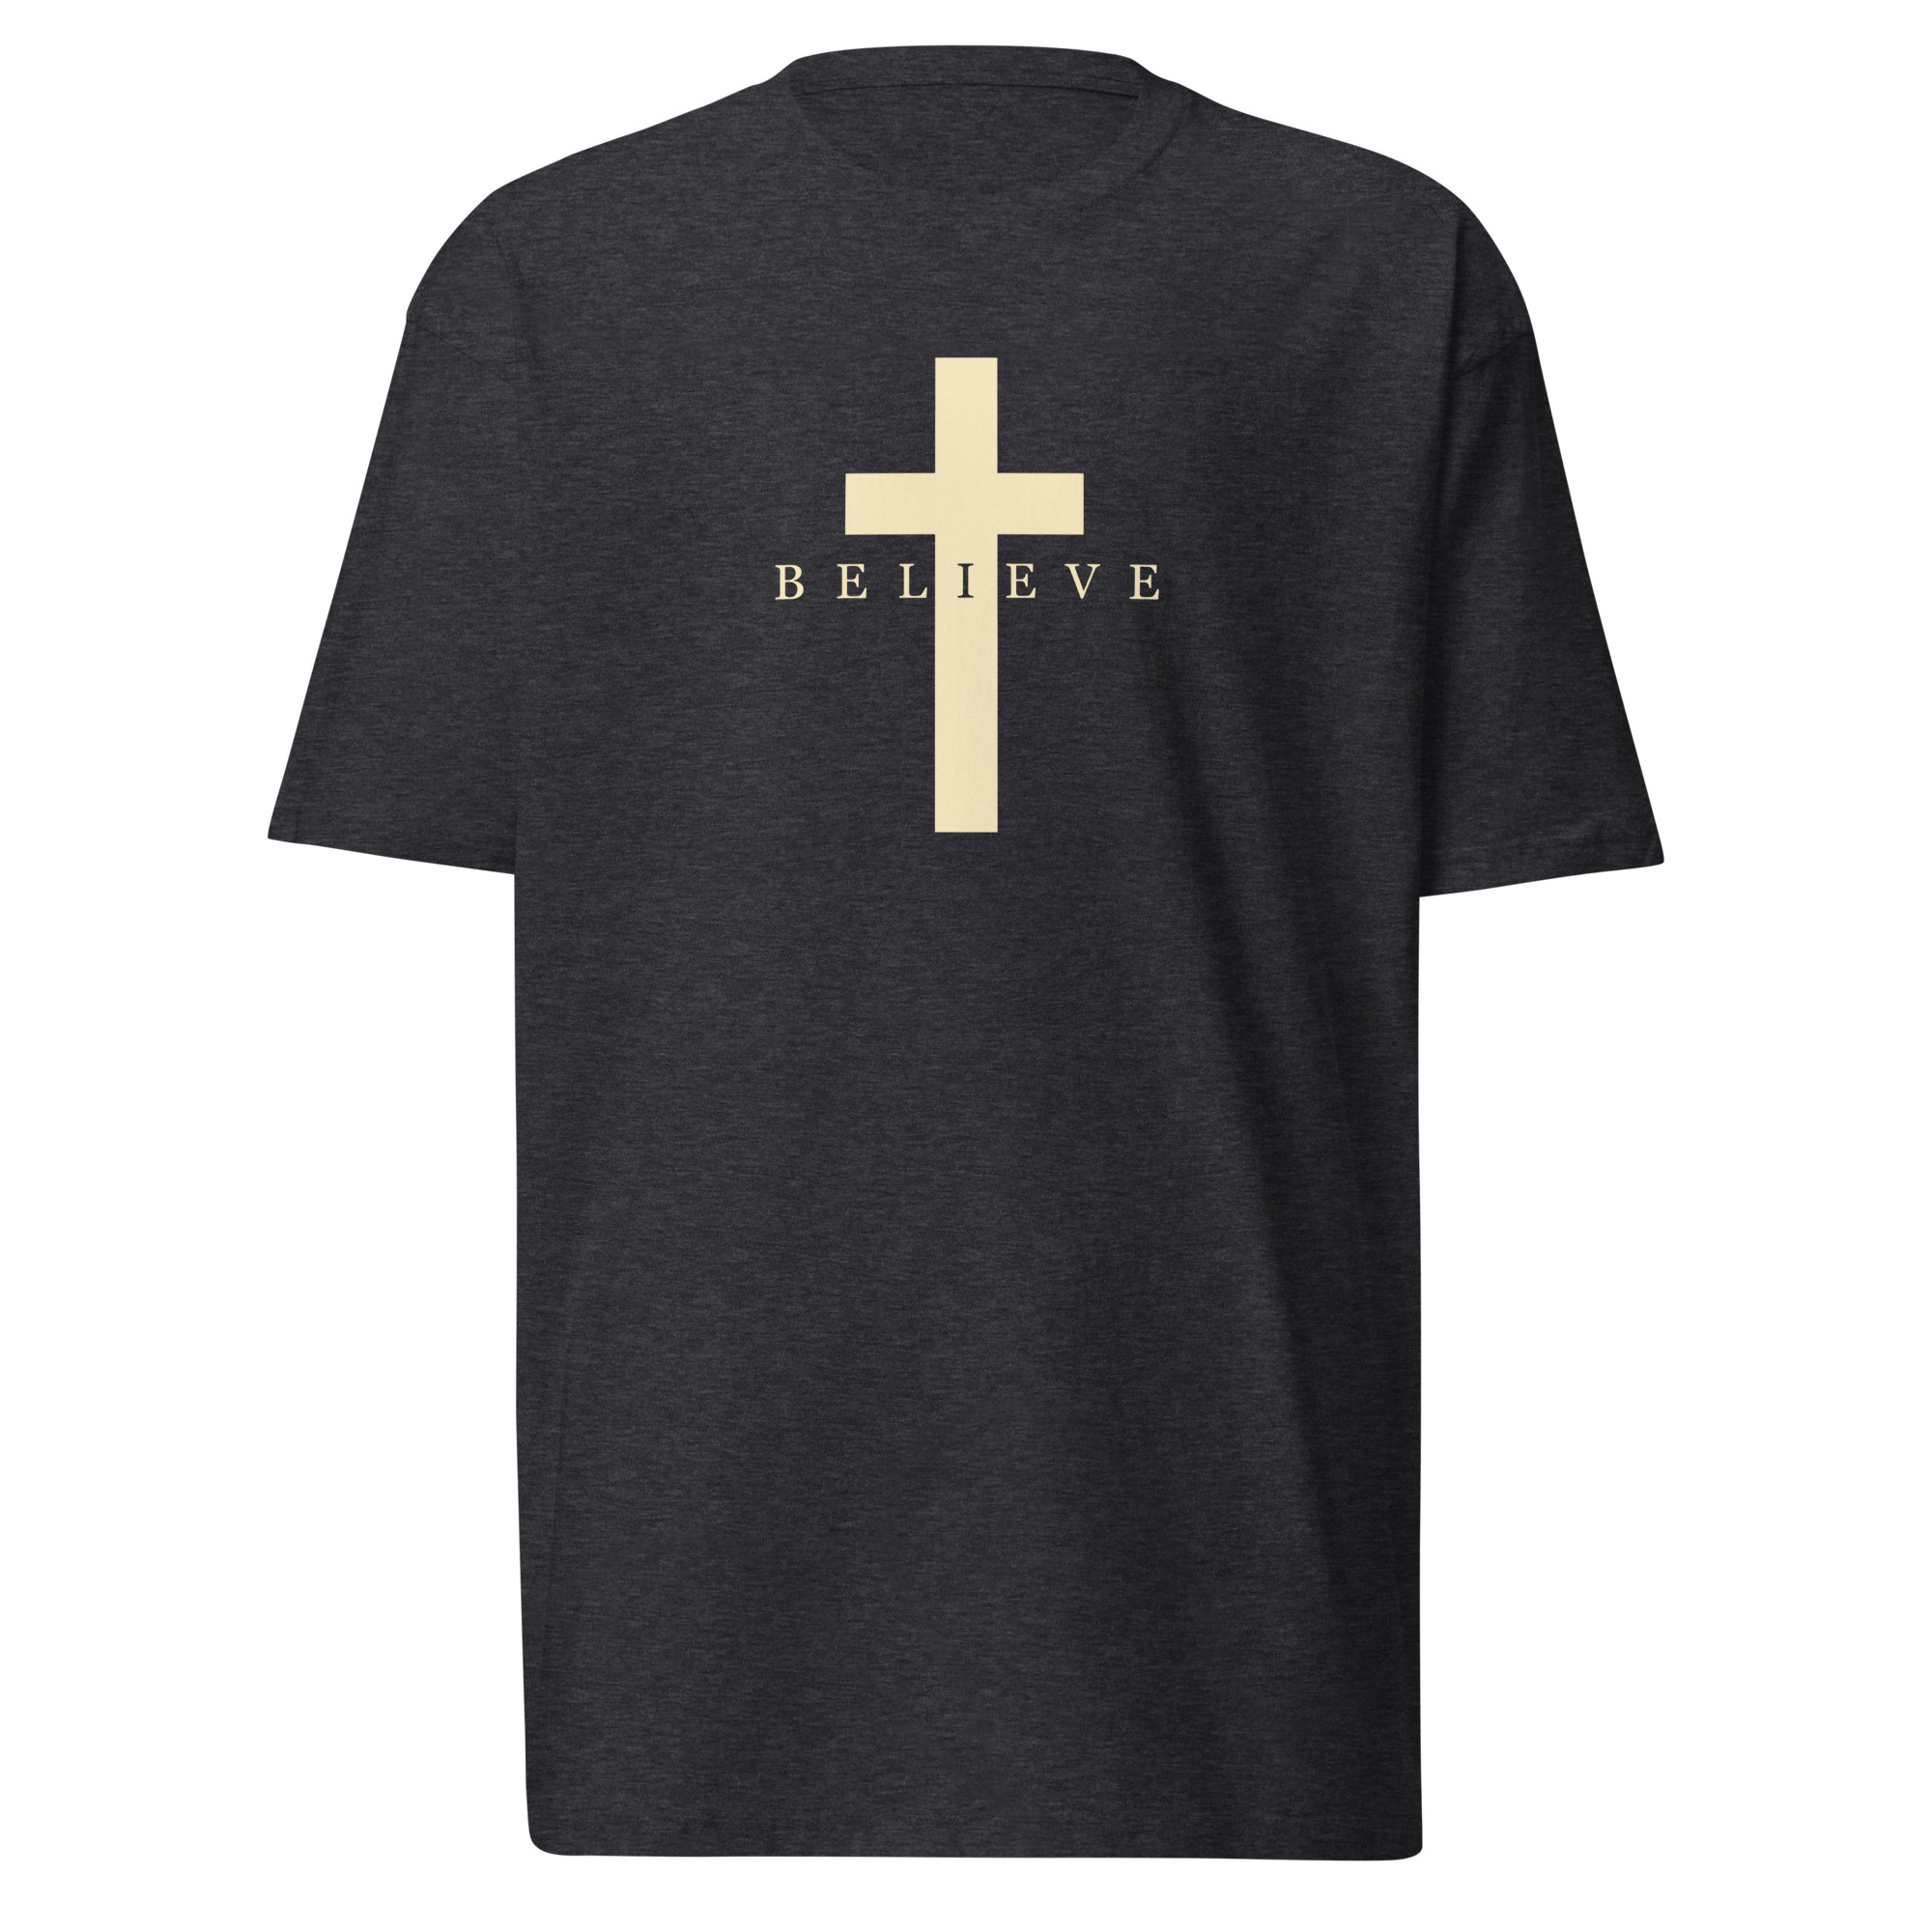 Believe T-Shirt - Charcoal Heather / XL